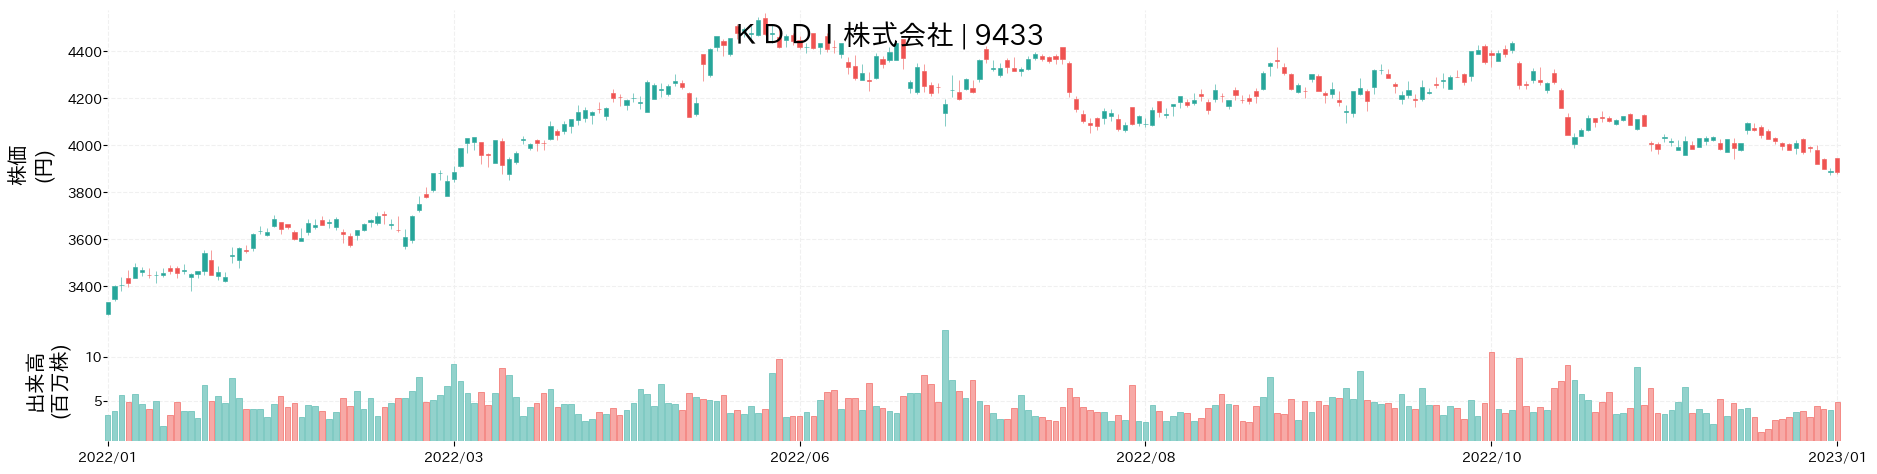 KDDIの株価推移(2022)